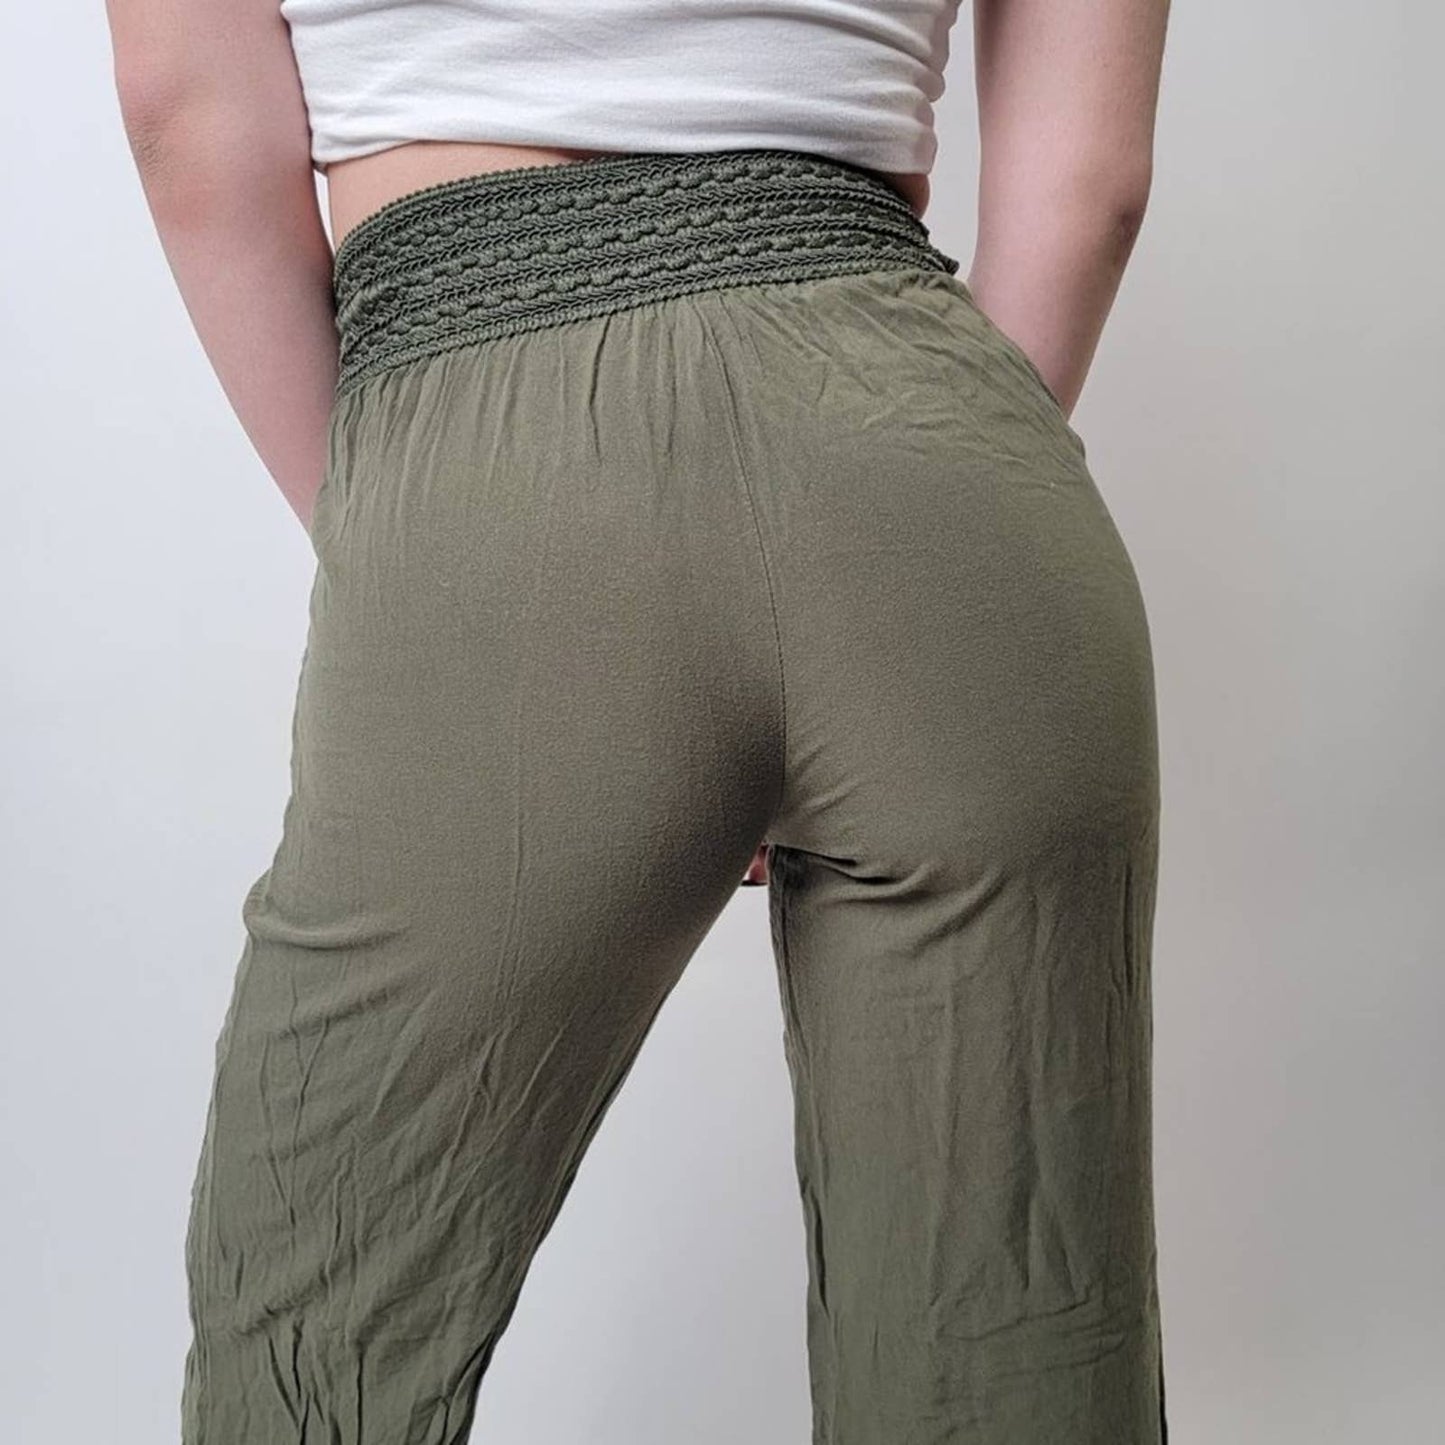 Joe B. Shirred Waist Olive Green Pants - XS